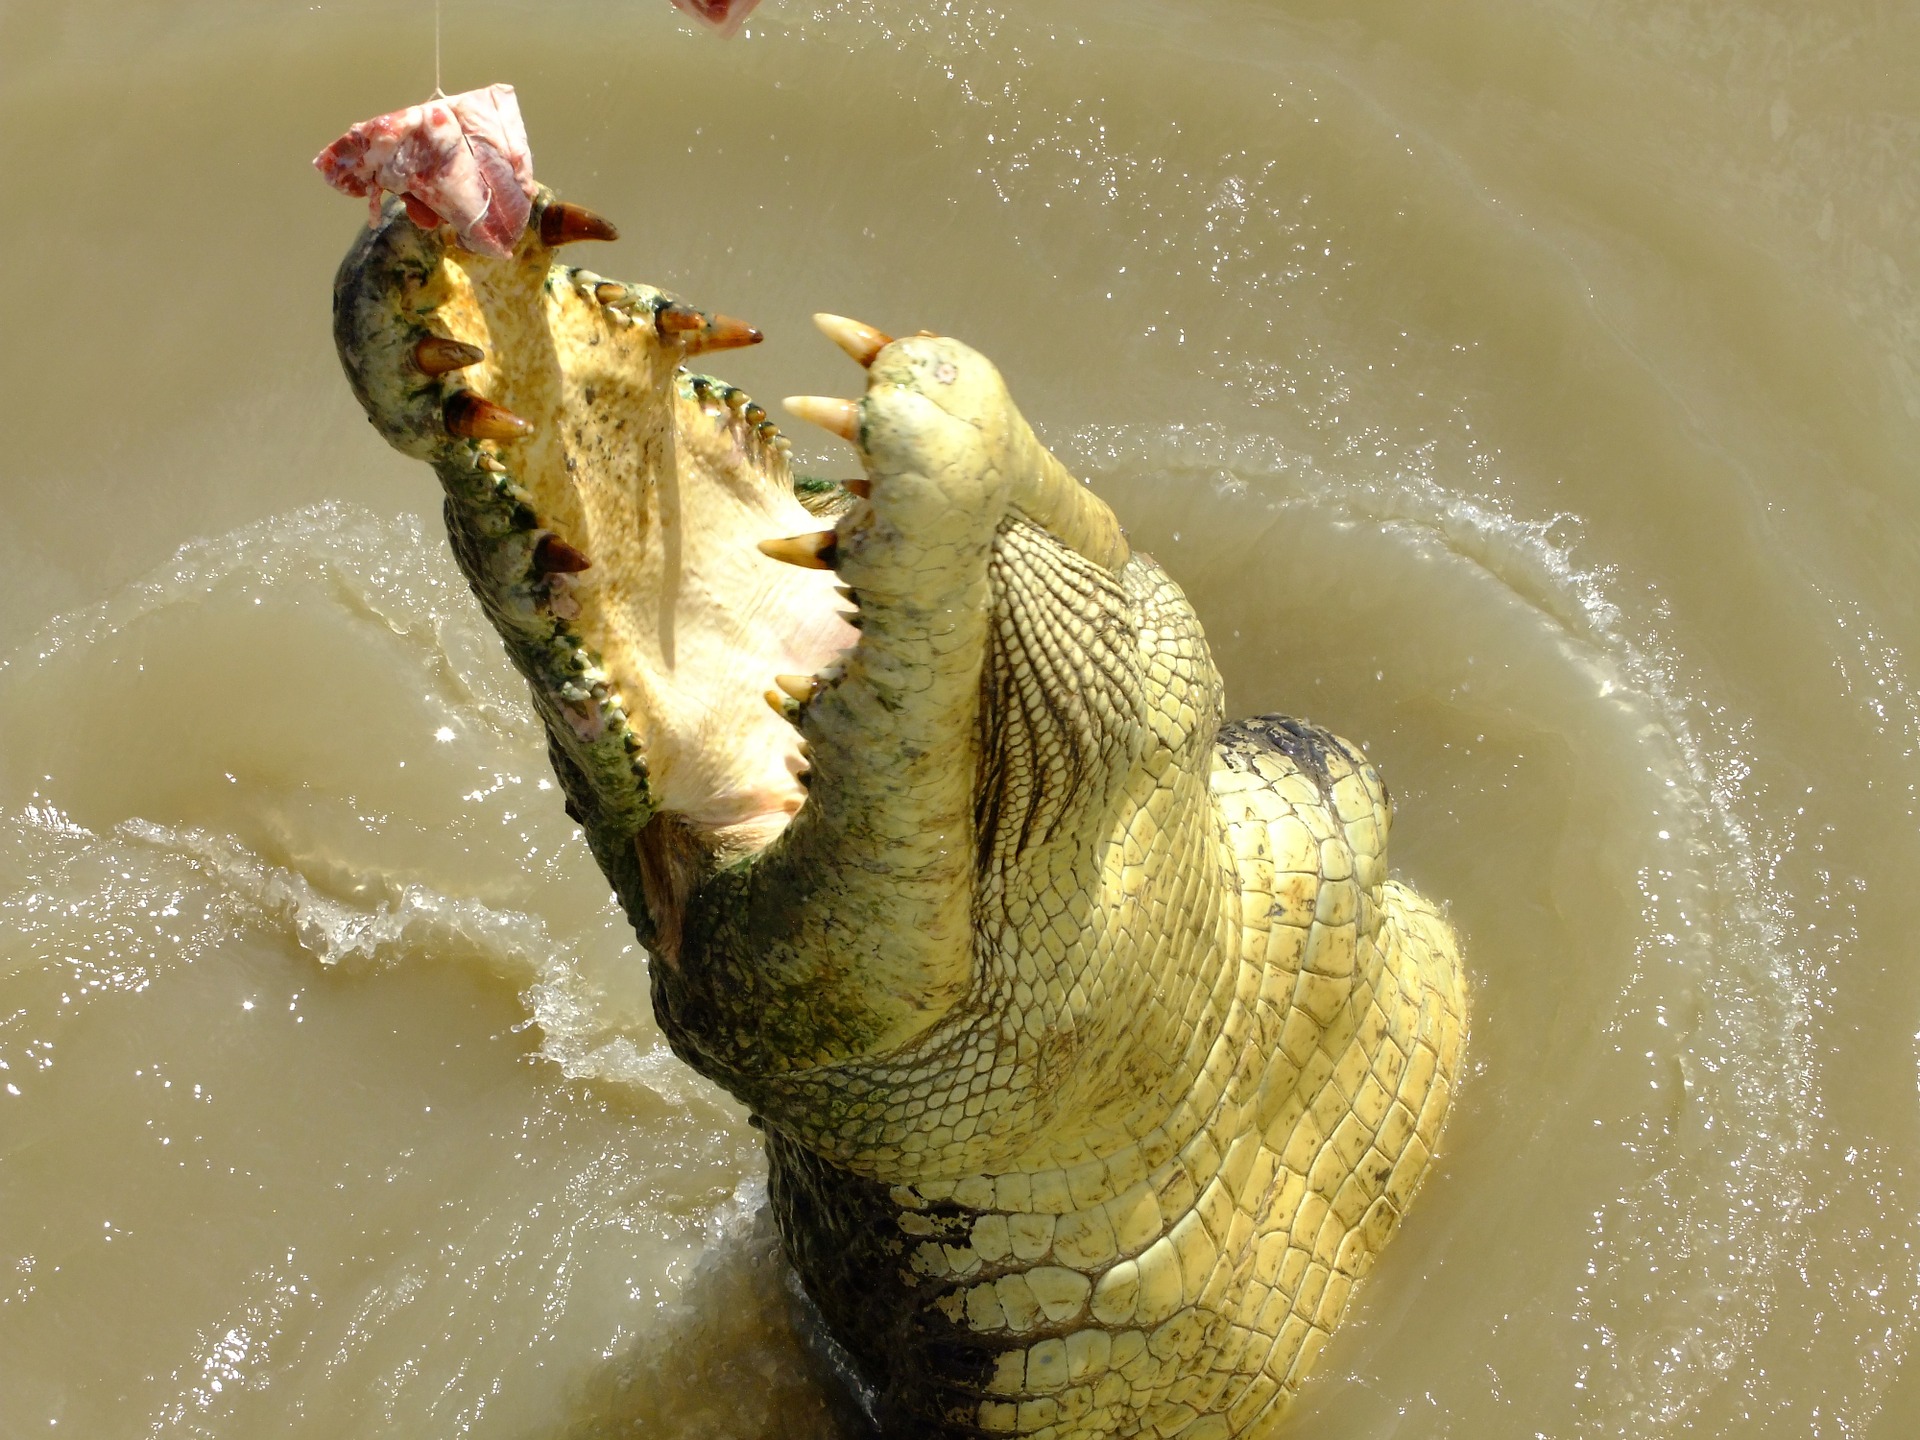 Vietnamese Saltwater Crocodile